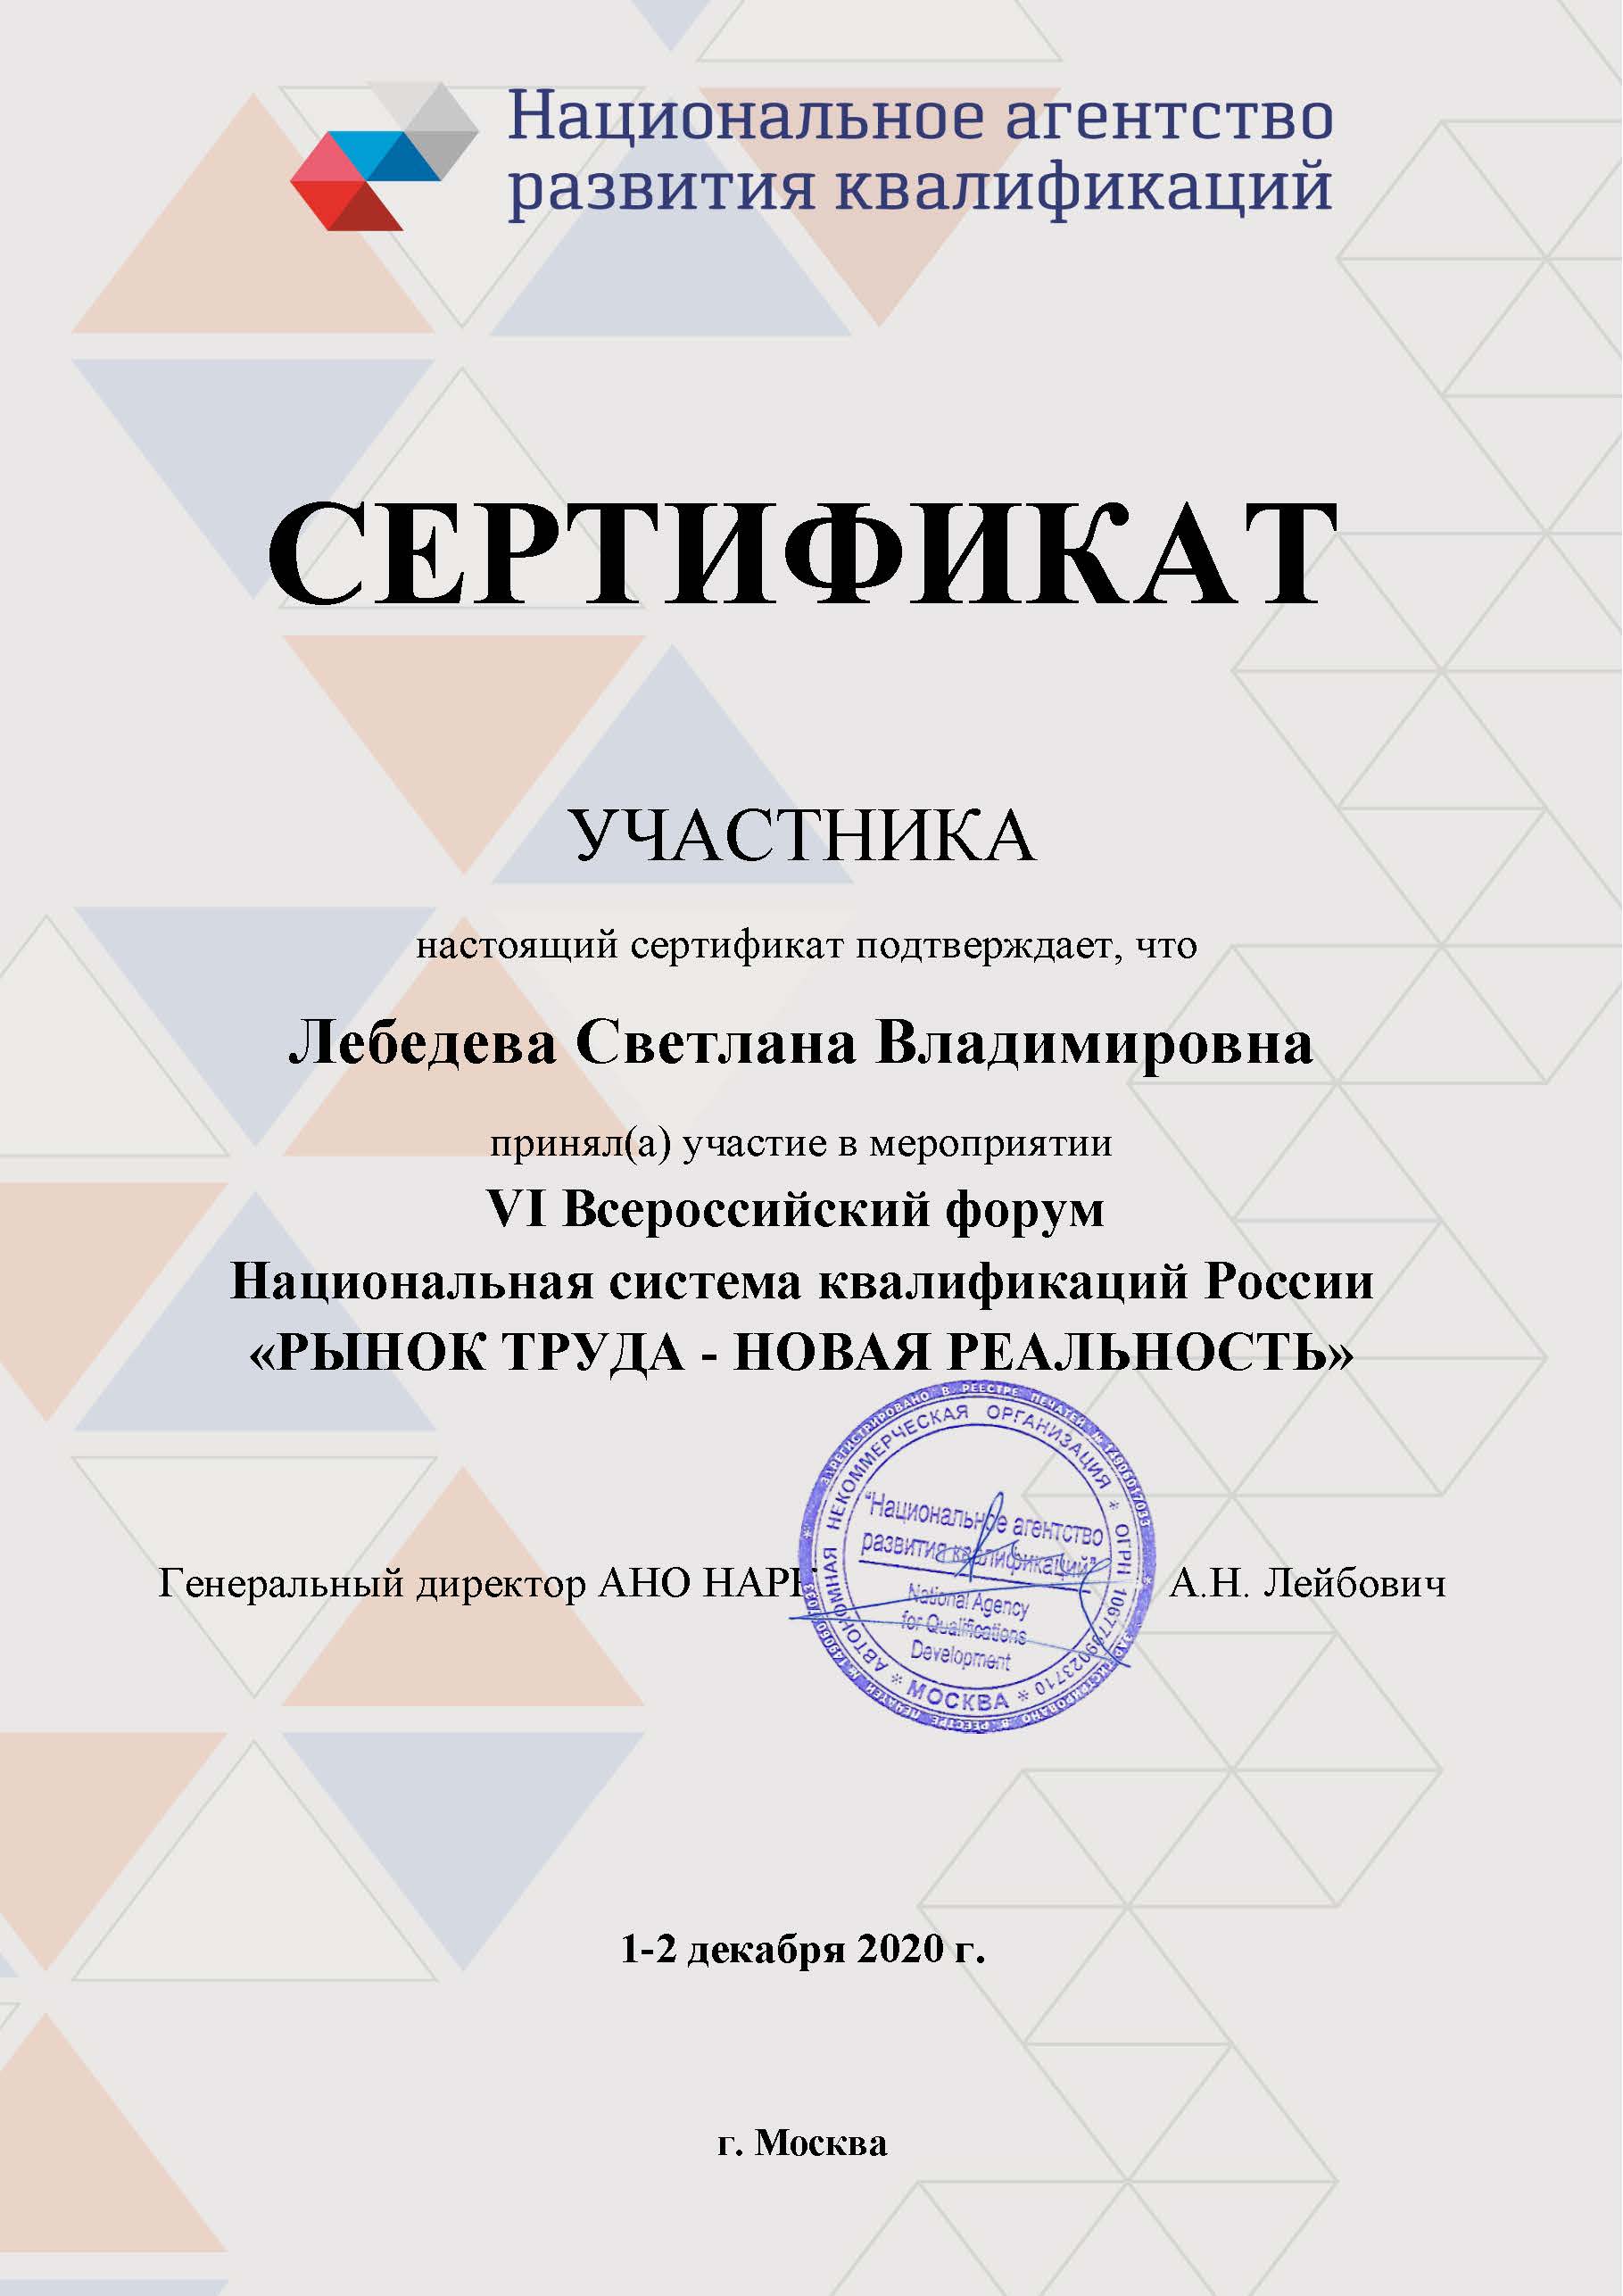 Сертификат участника Лебедева Светлана Владимировна 